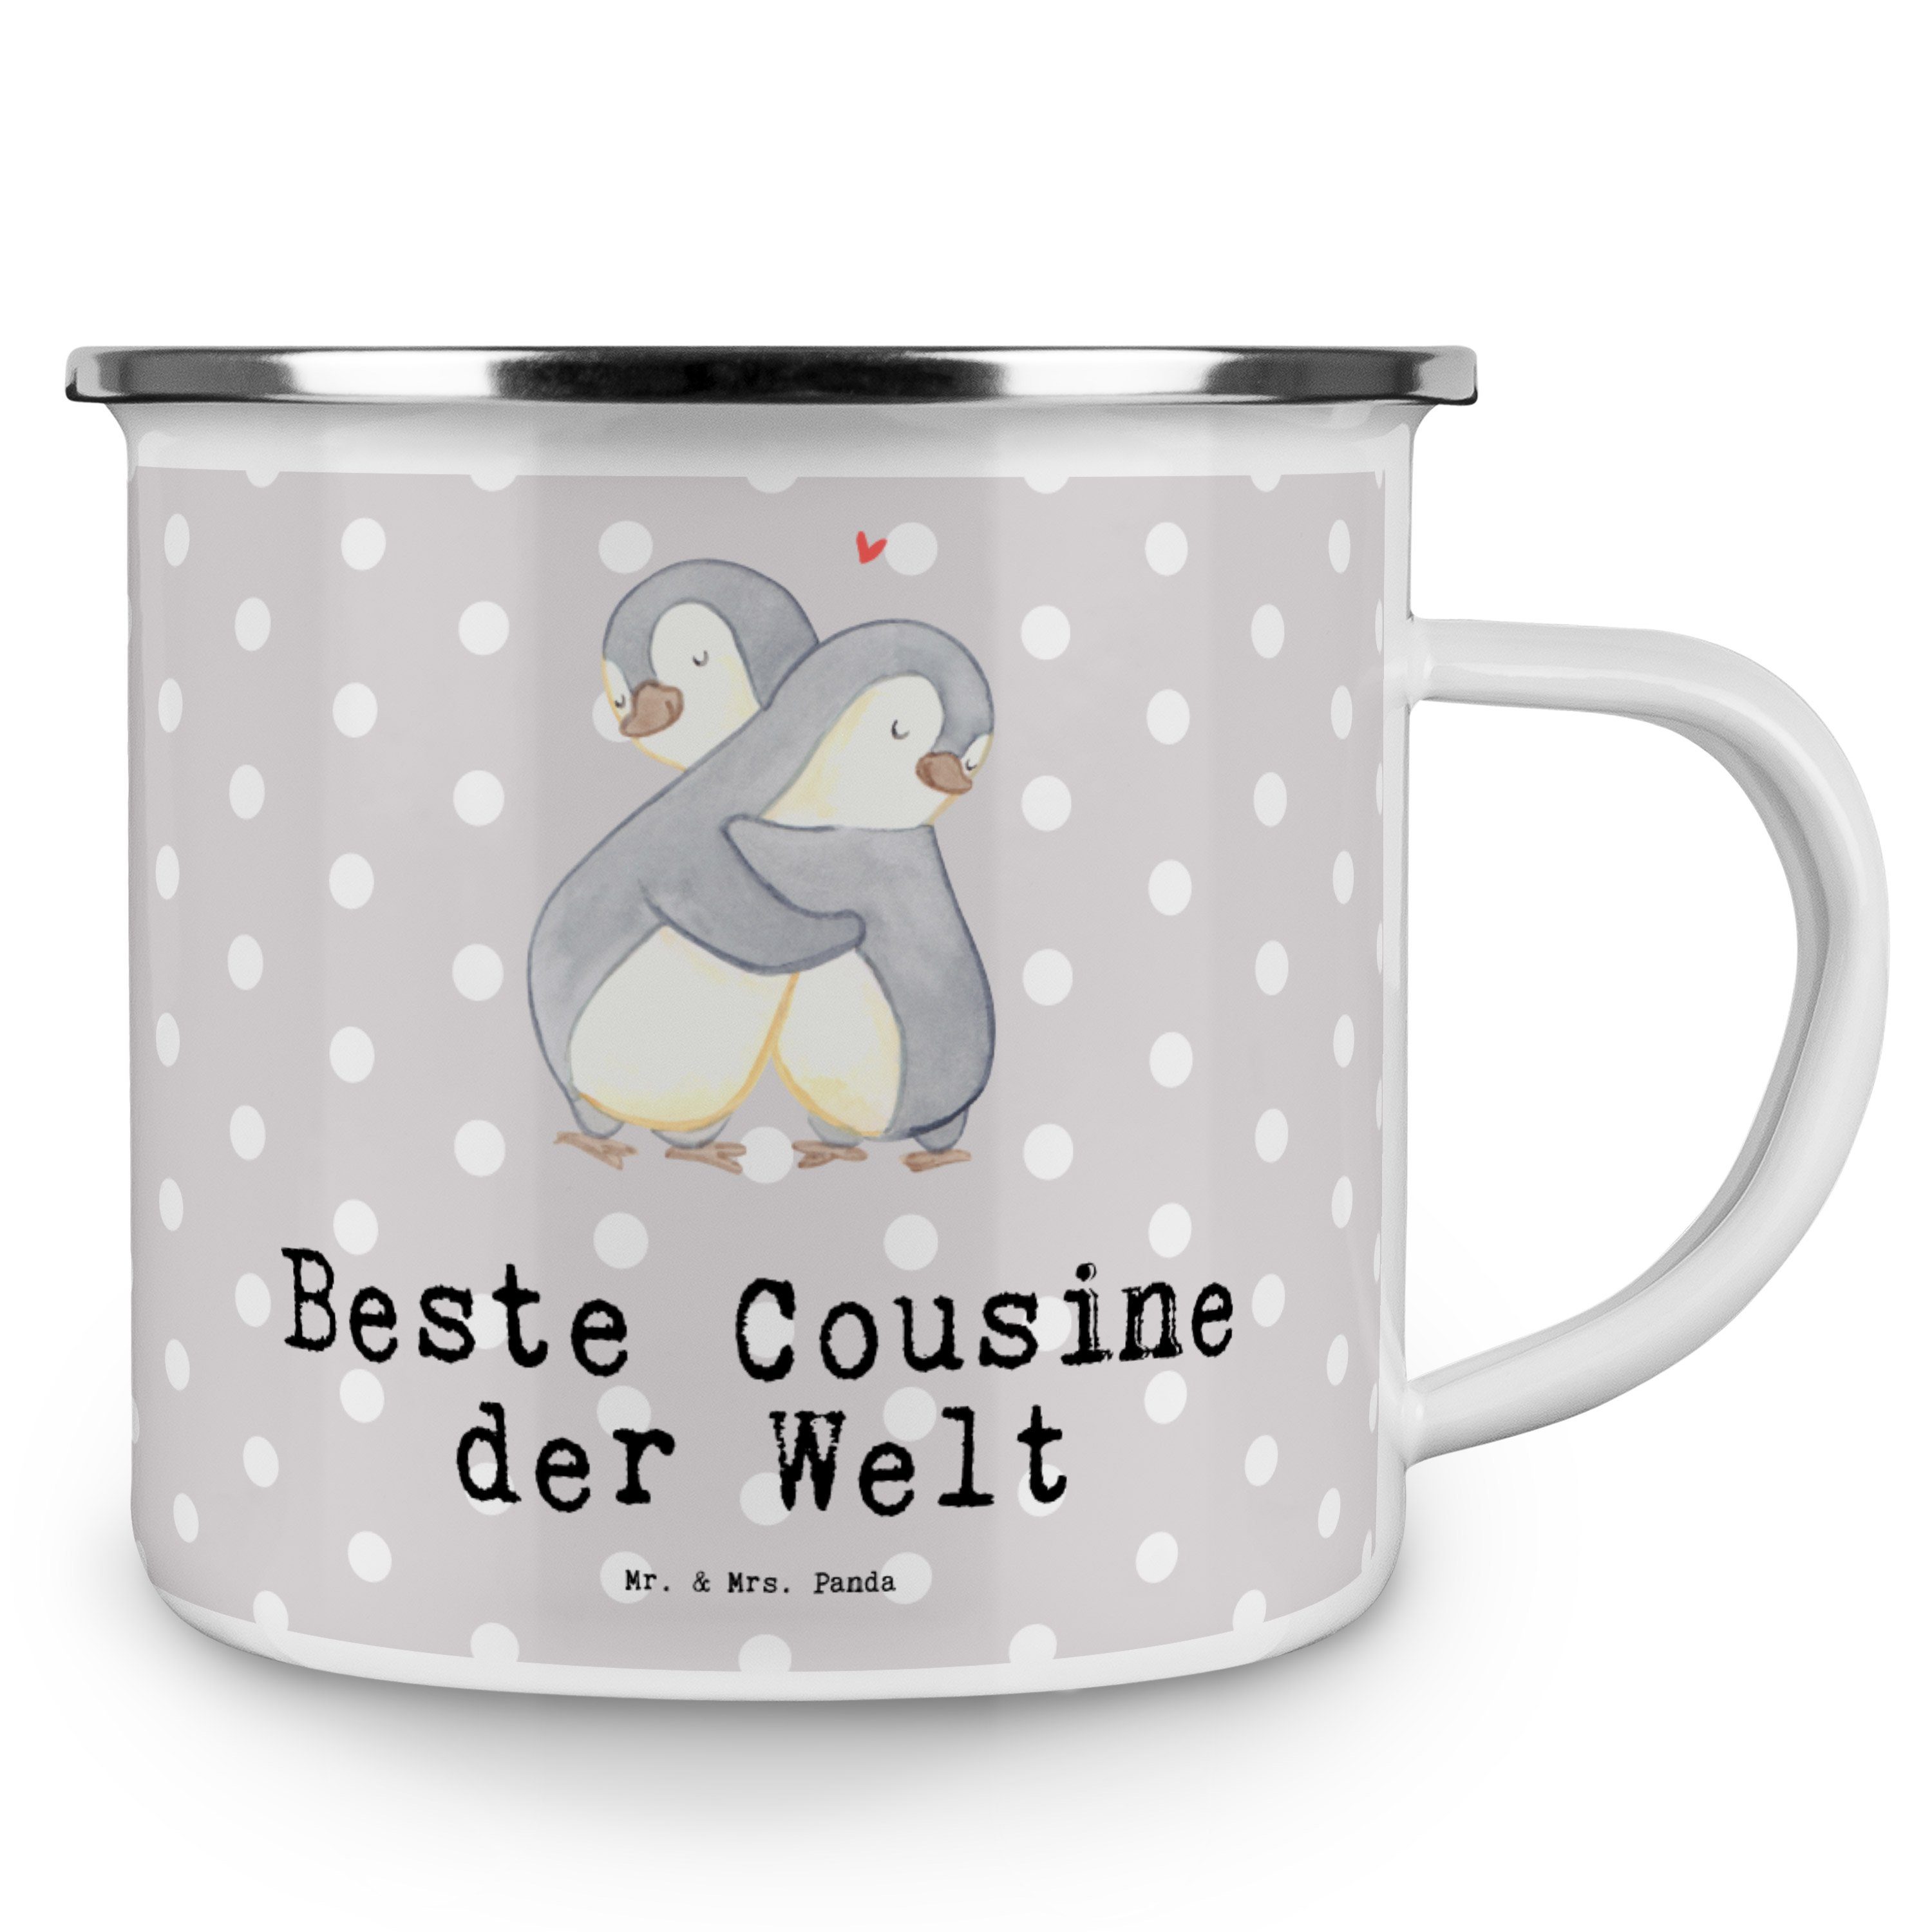 - Welt Cousine Mrs. Emaille Pastell T, Pinguin Becher & Geschenk, Panda Beste der Mr. Grau Edelstahl -